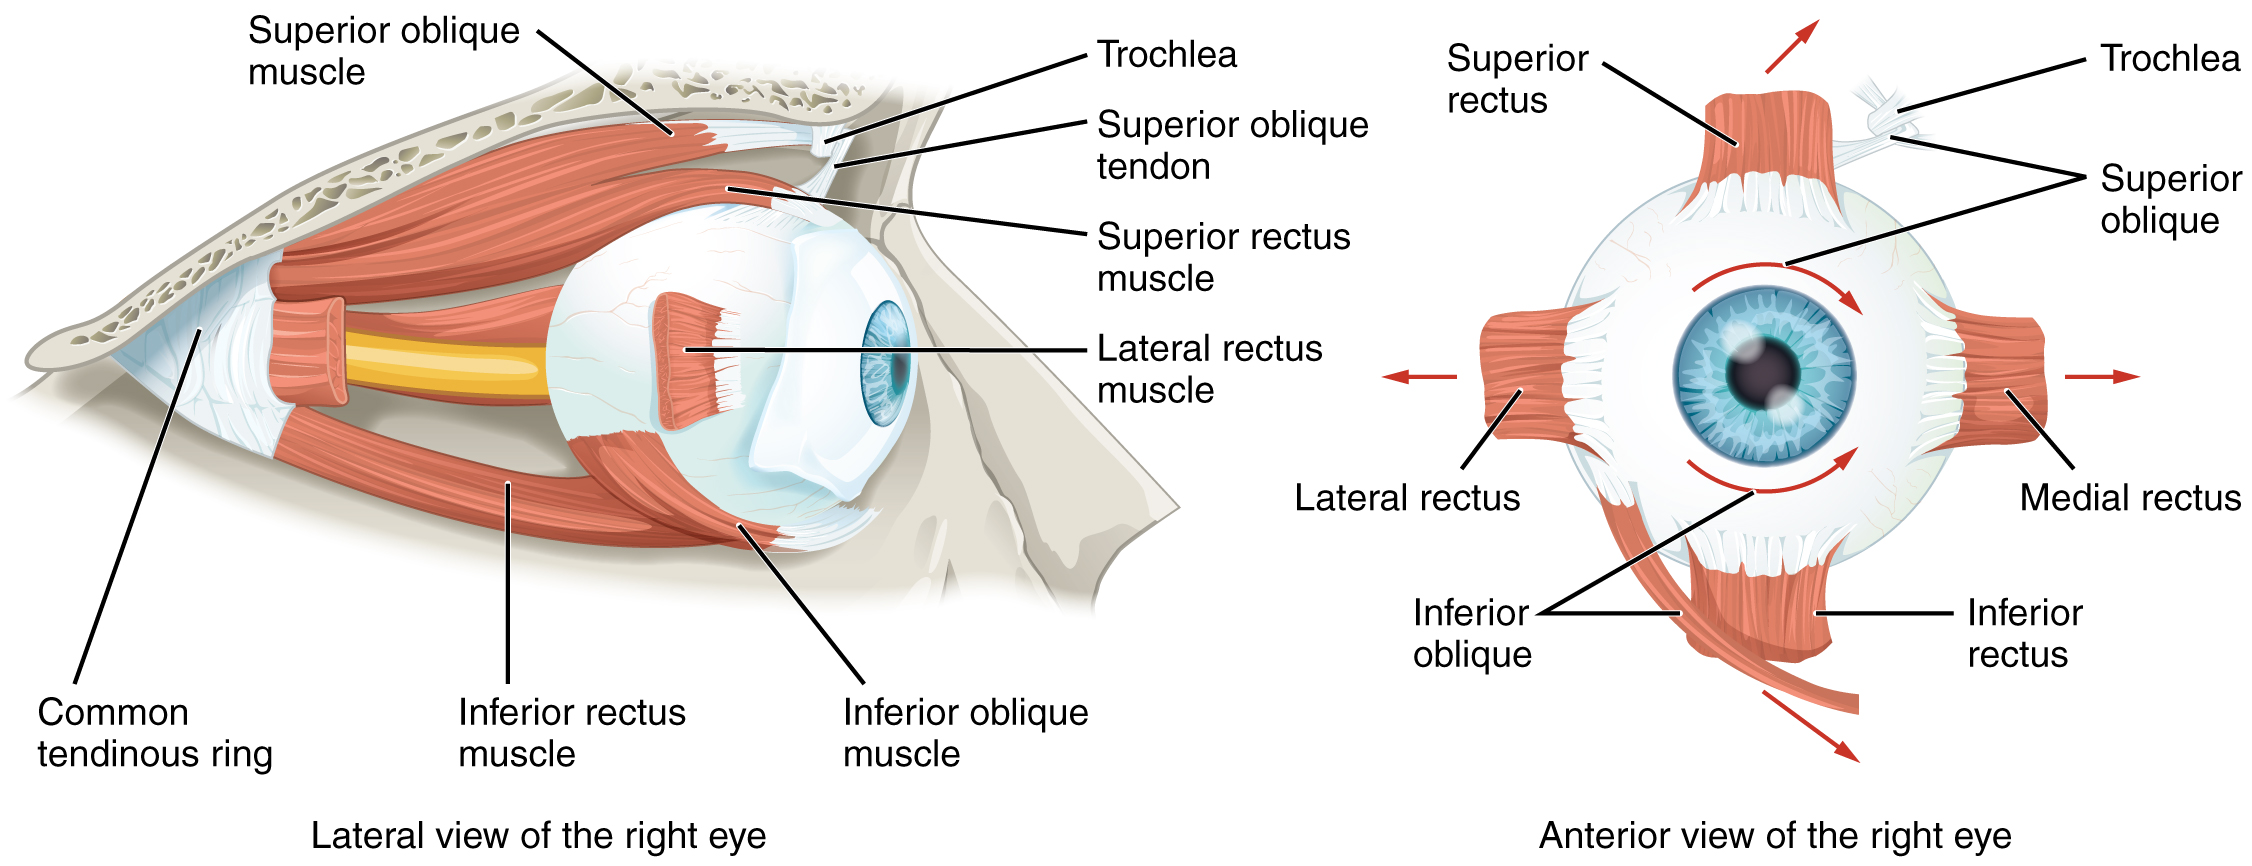 Oculomotor Muscles Of The Eye Diagram